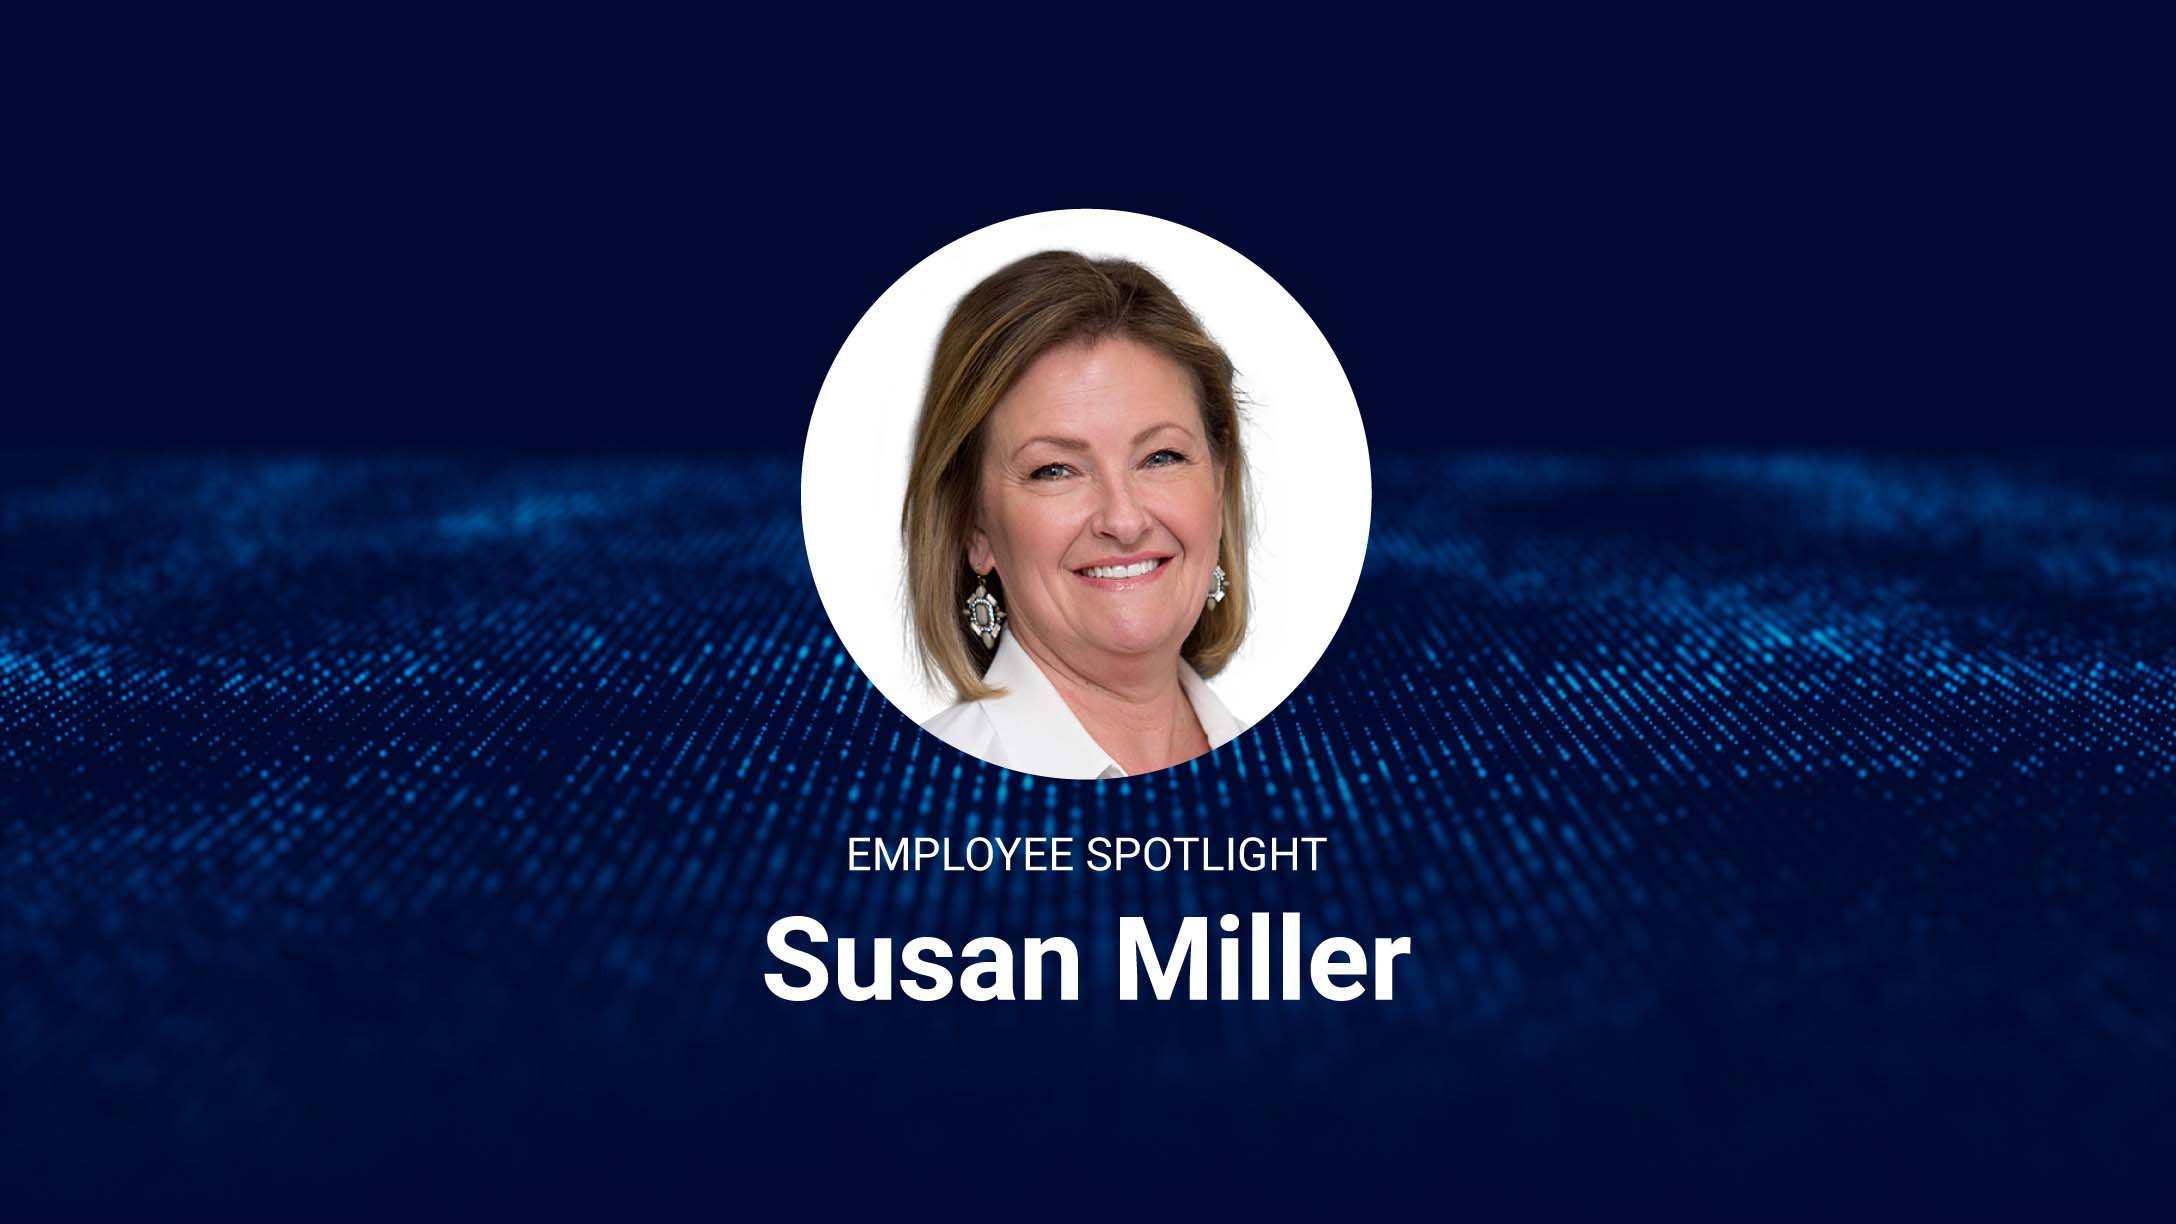 Employee Spotlight with Susan Miller's portrait